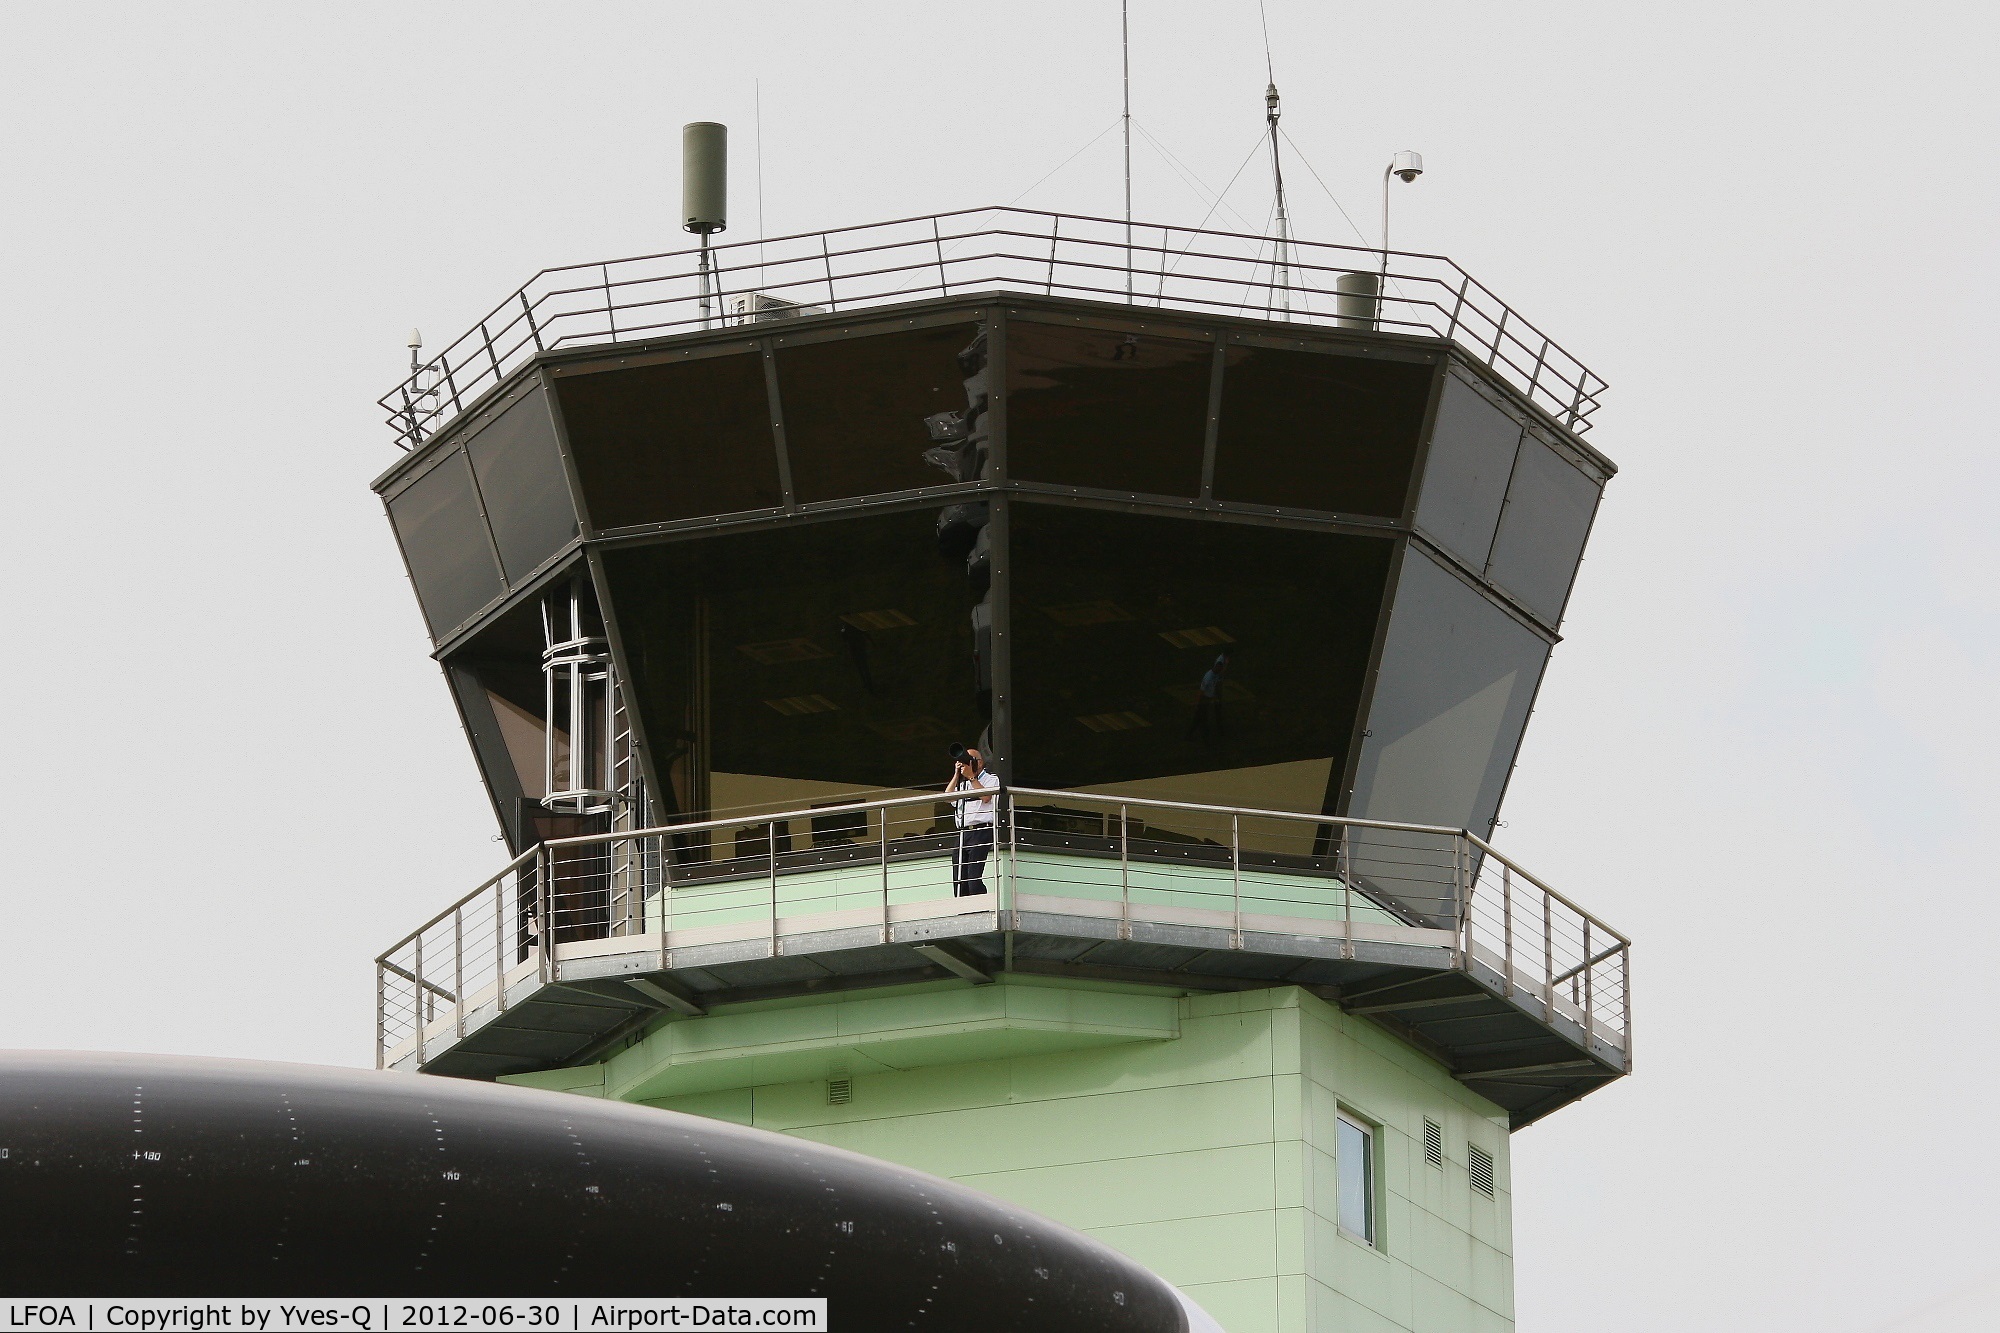 LFOA Airport - Control Tower, Avord Air Base 702 (LFOA). On left side, Boing E-3F radar antenna.